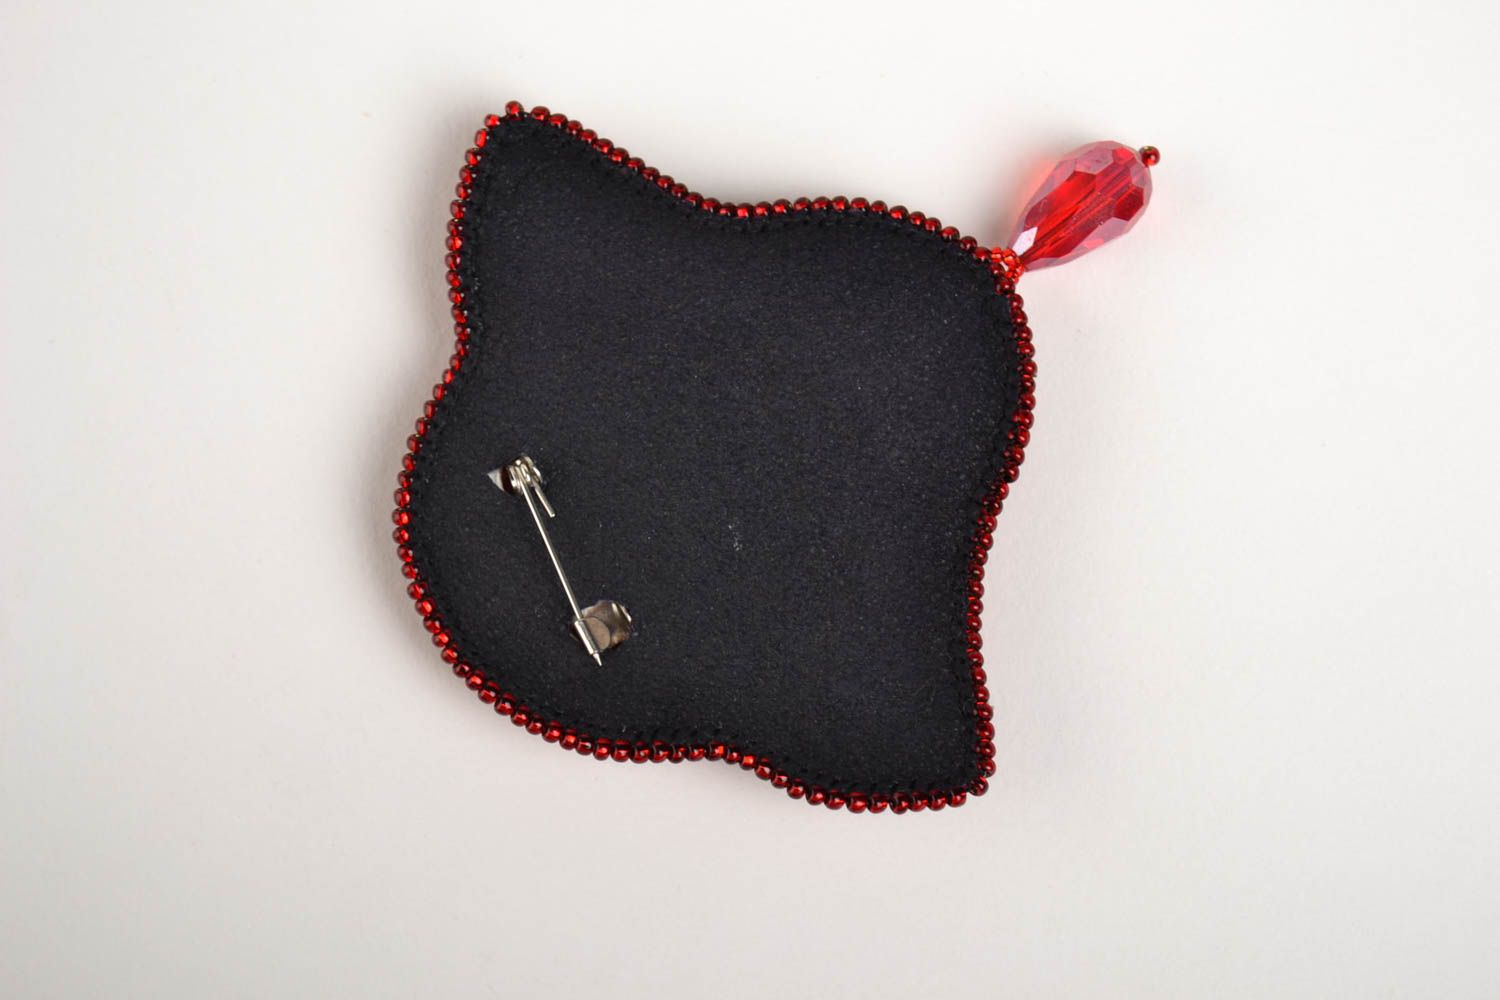 Handmade stylish beaded brooch designer red brooch cute unusual accessory photo 2